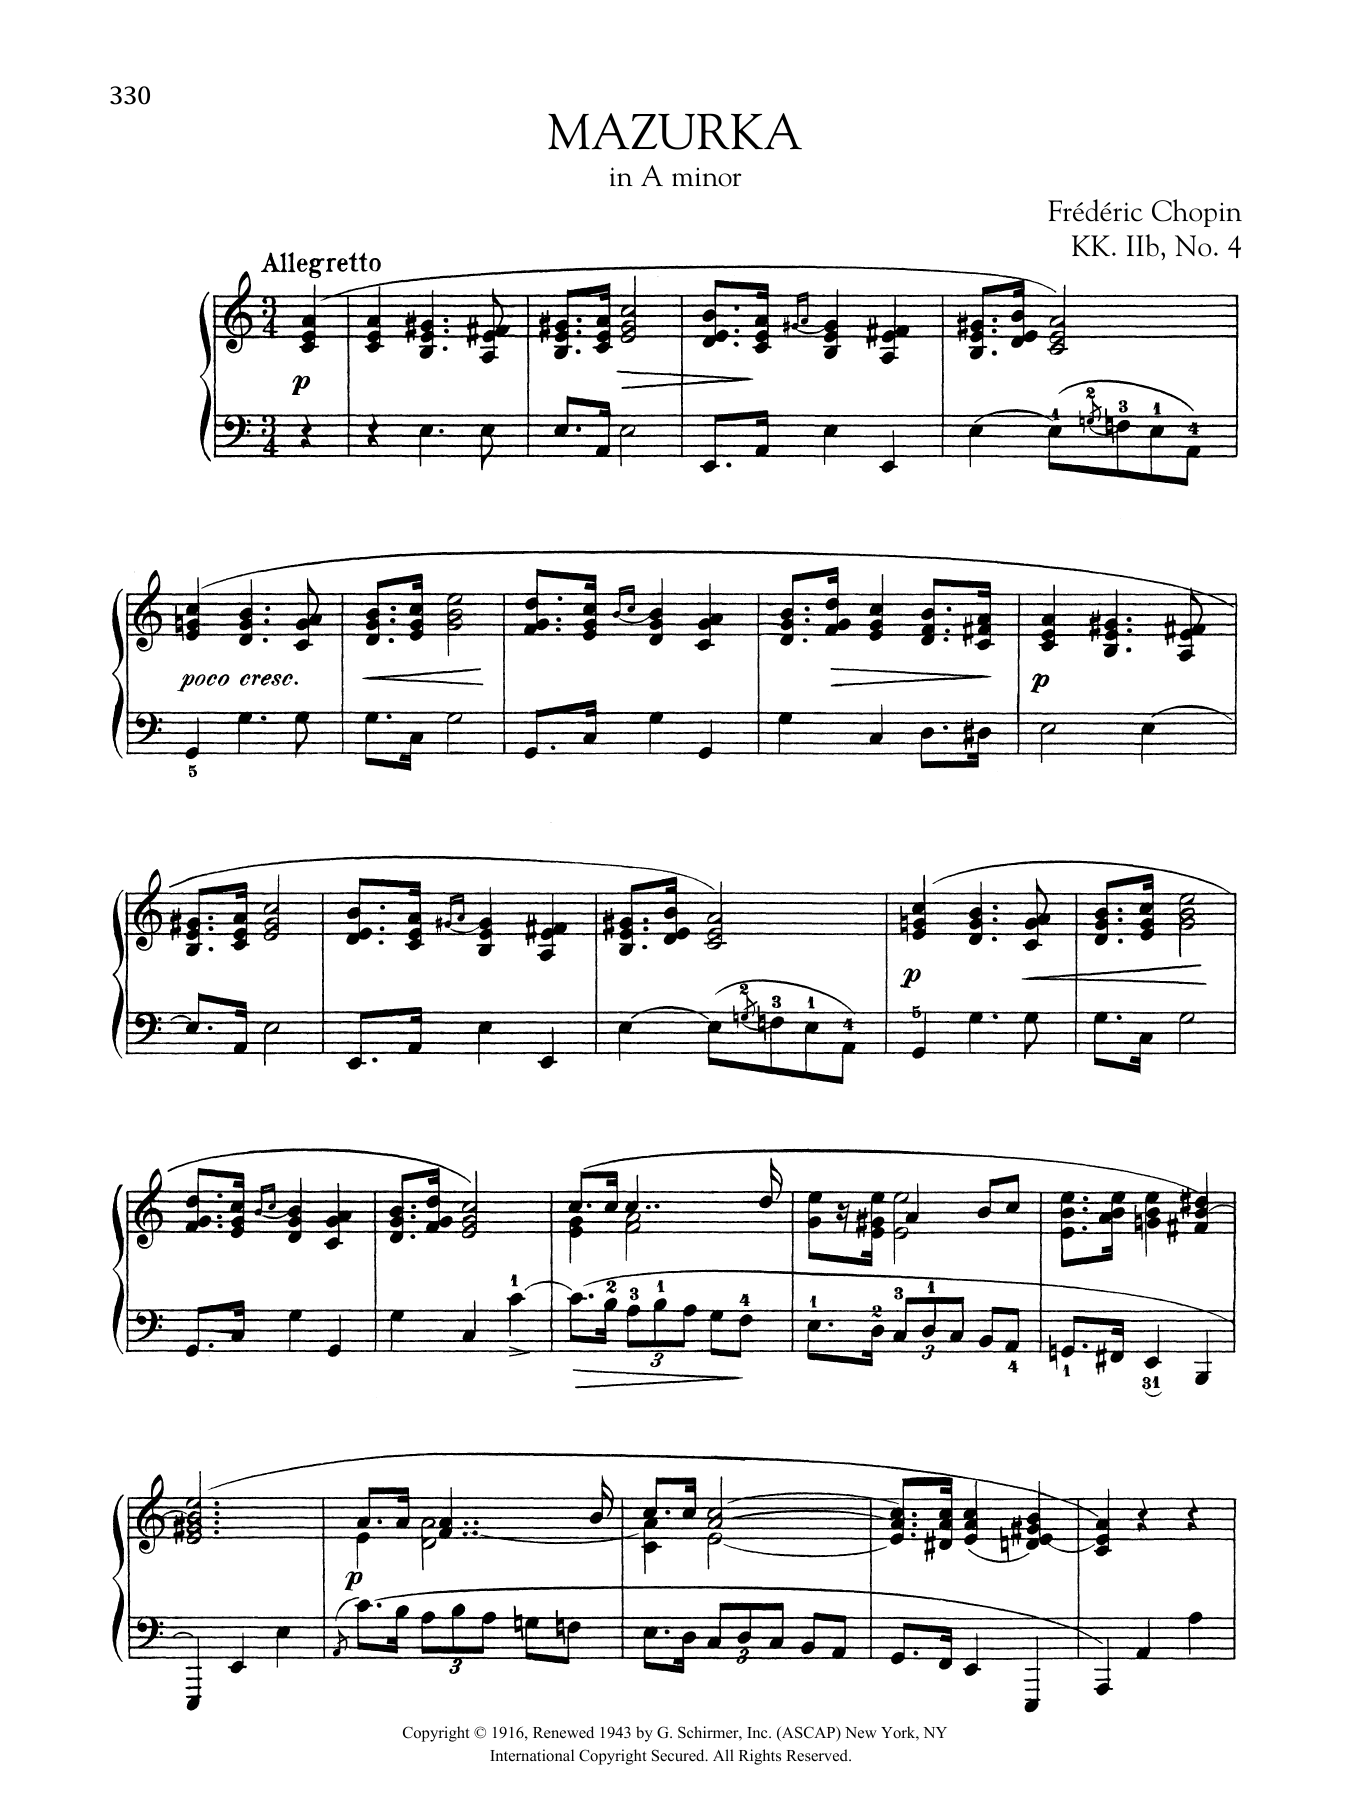 Download Frederic Chopin Mazurka in A minor, KK. IIb, No. 4 Sheet Music